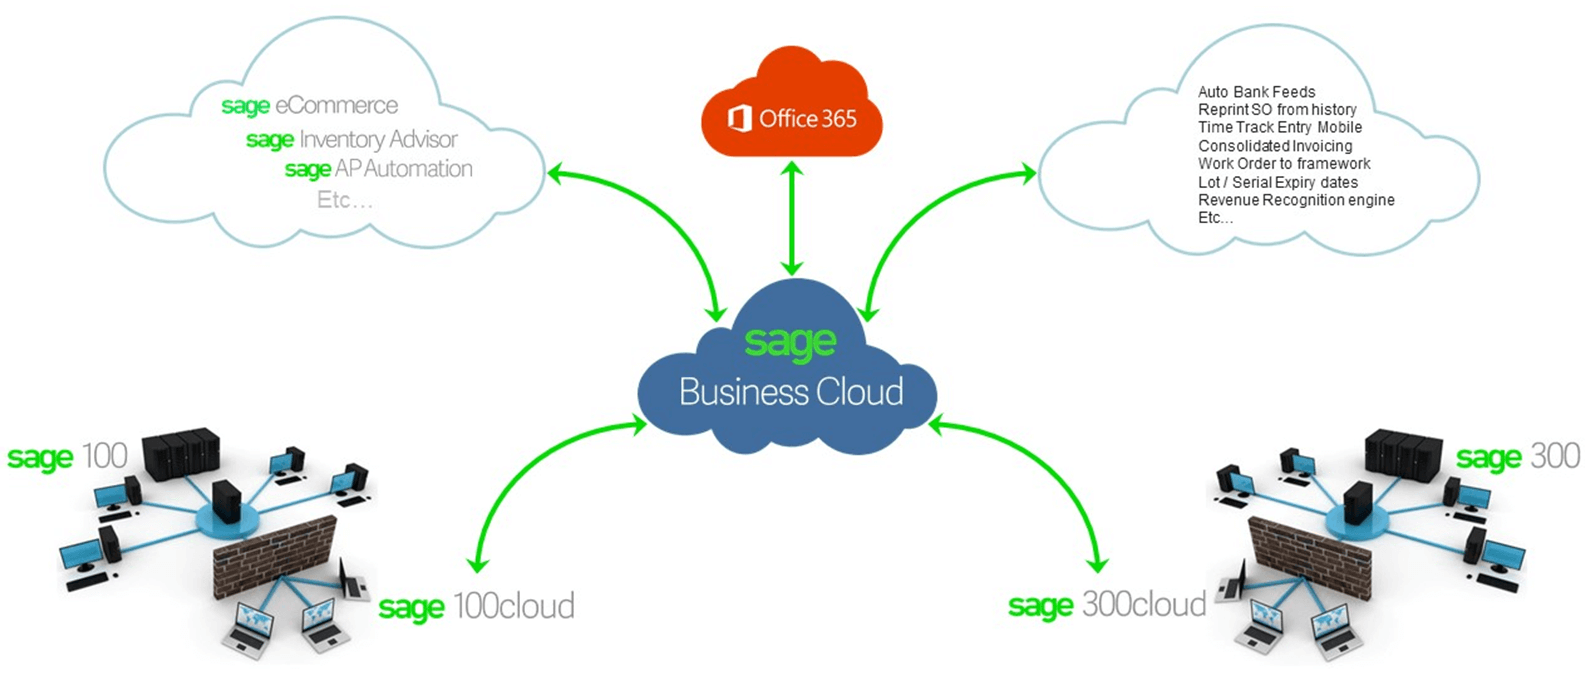 sage-100cloud-connected-cloud-capabilities